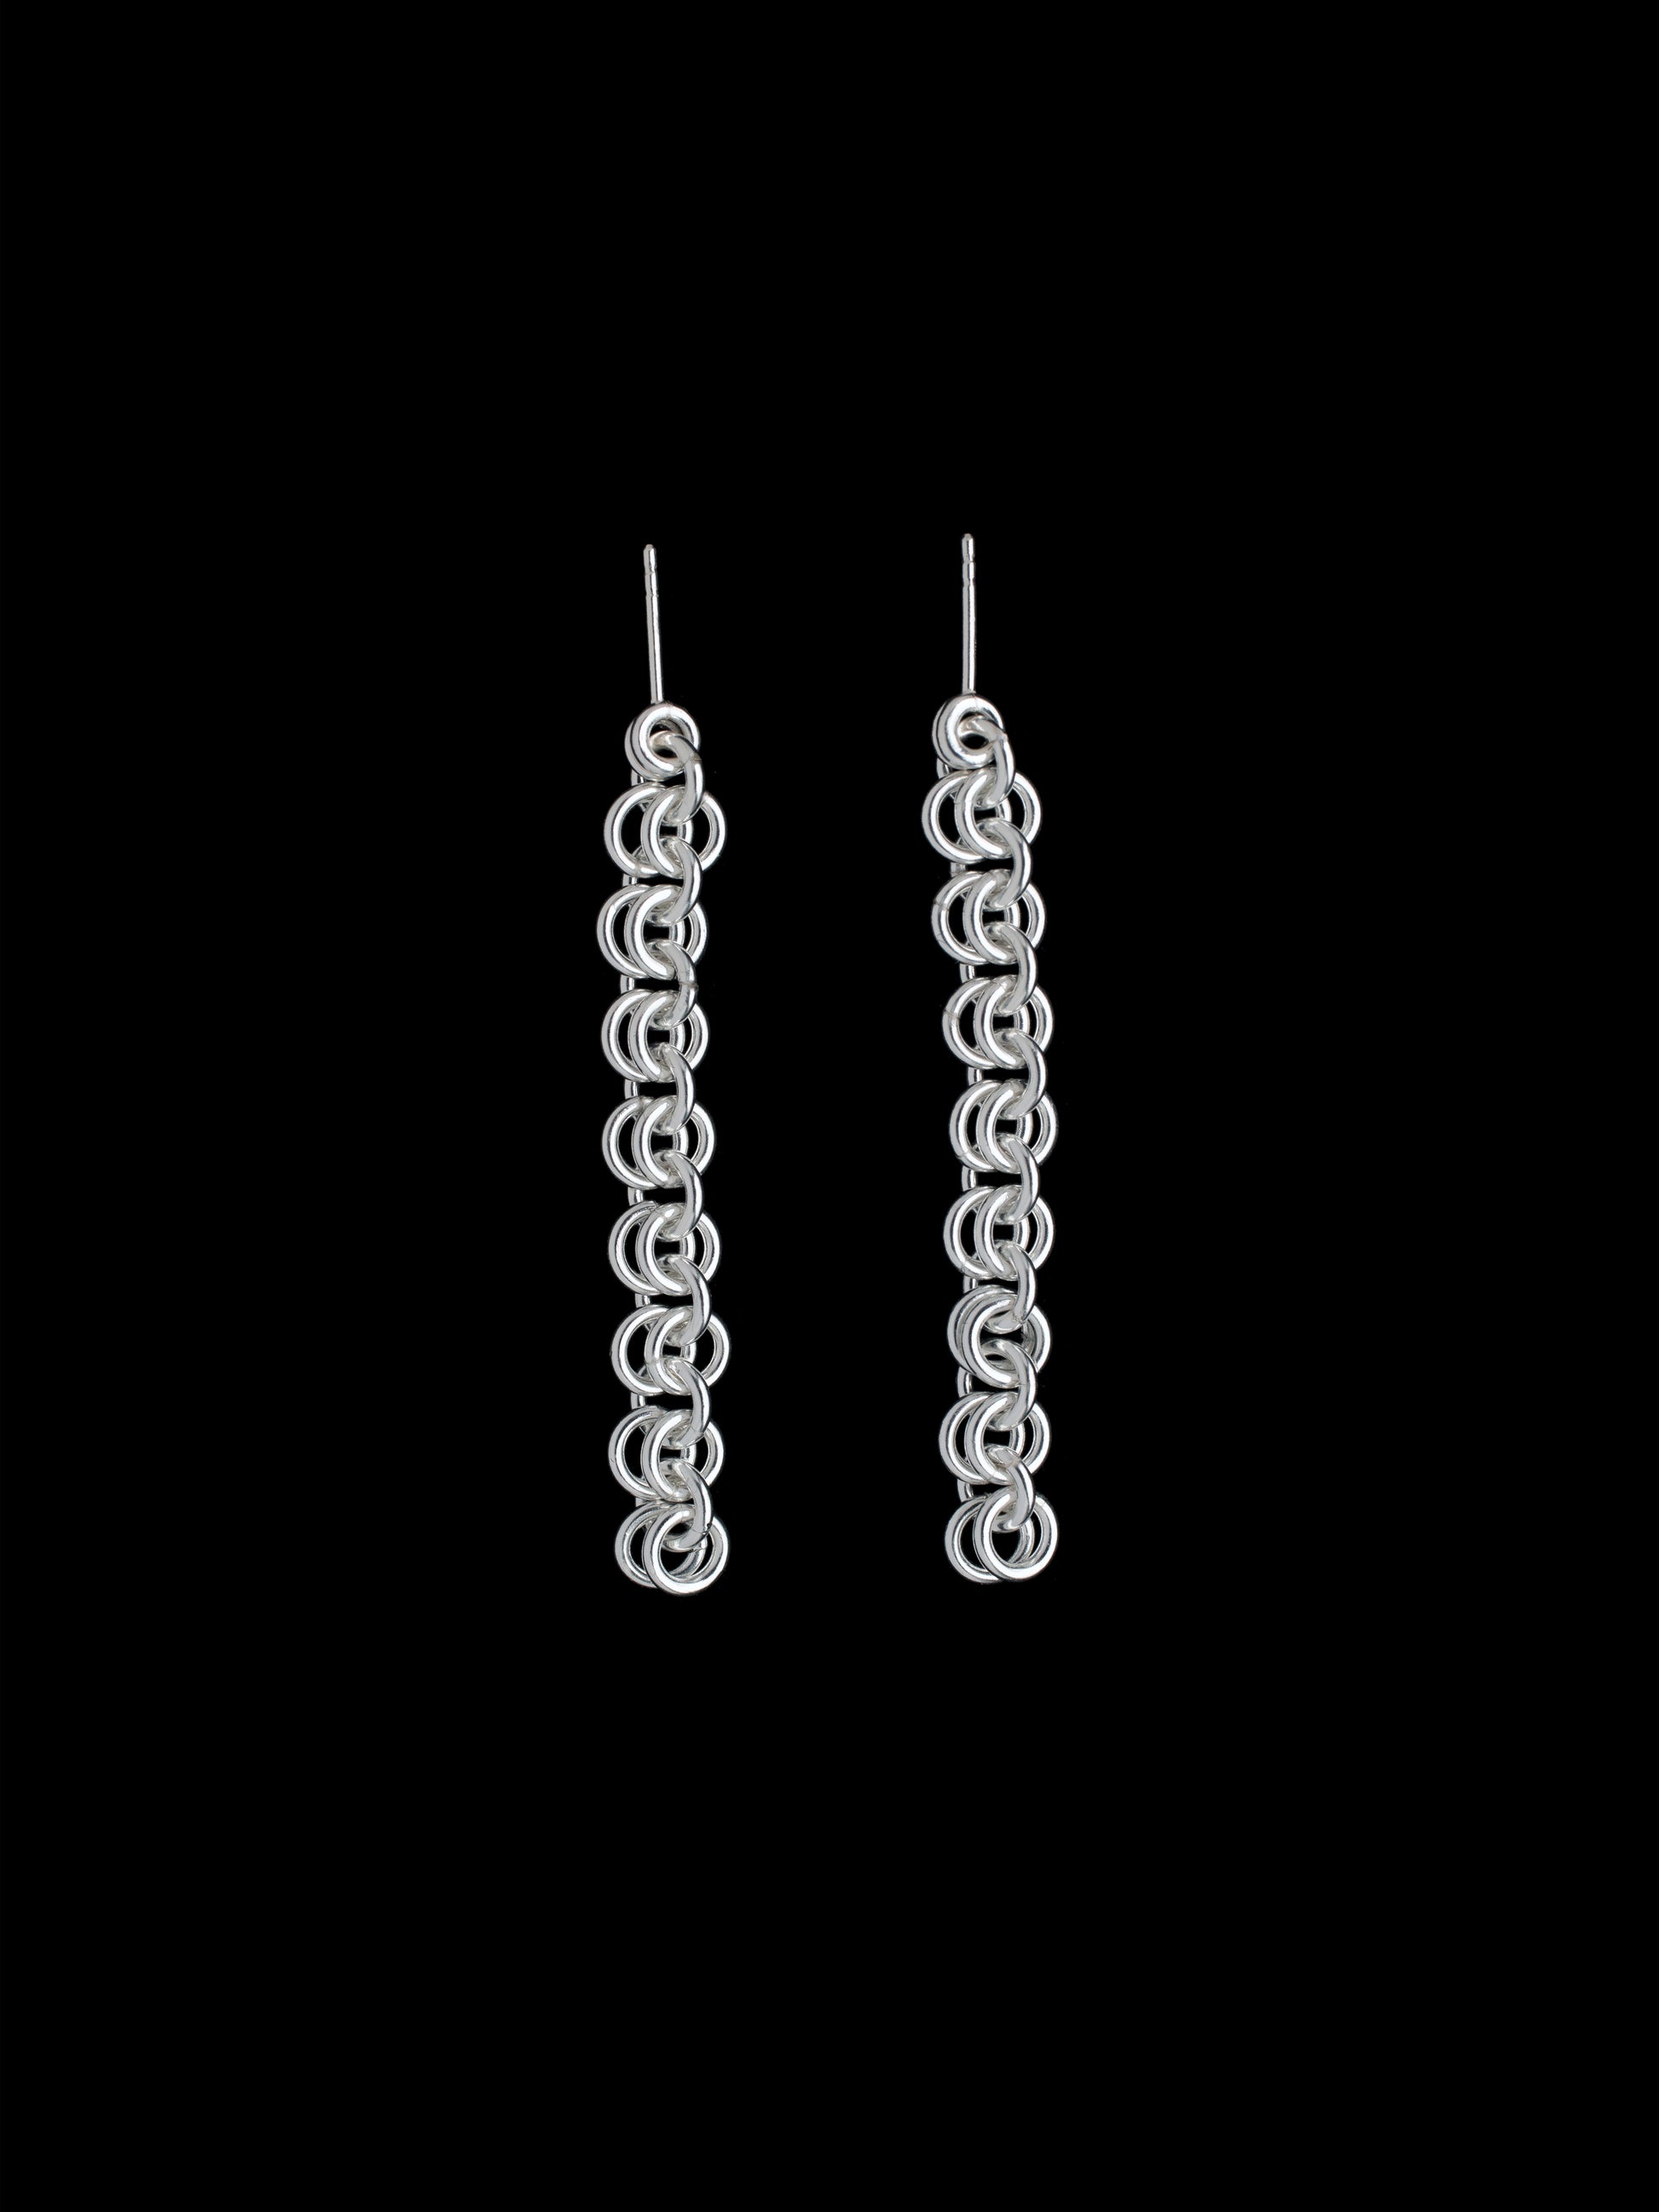 Chain drop earrings handmade in recycled silver